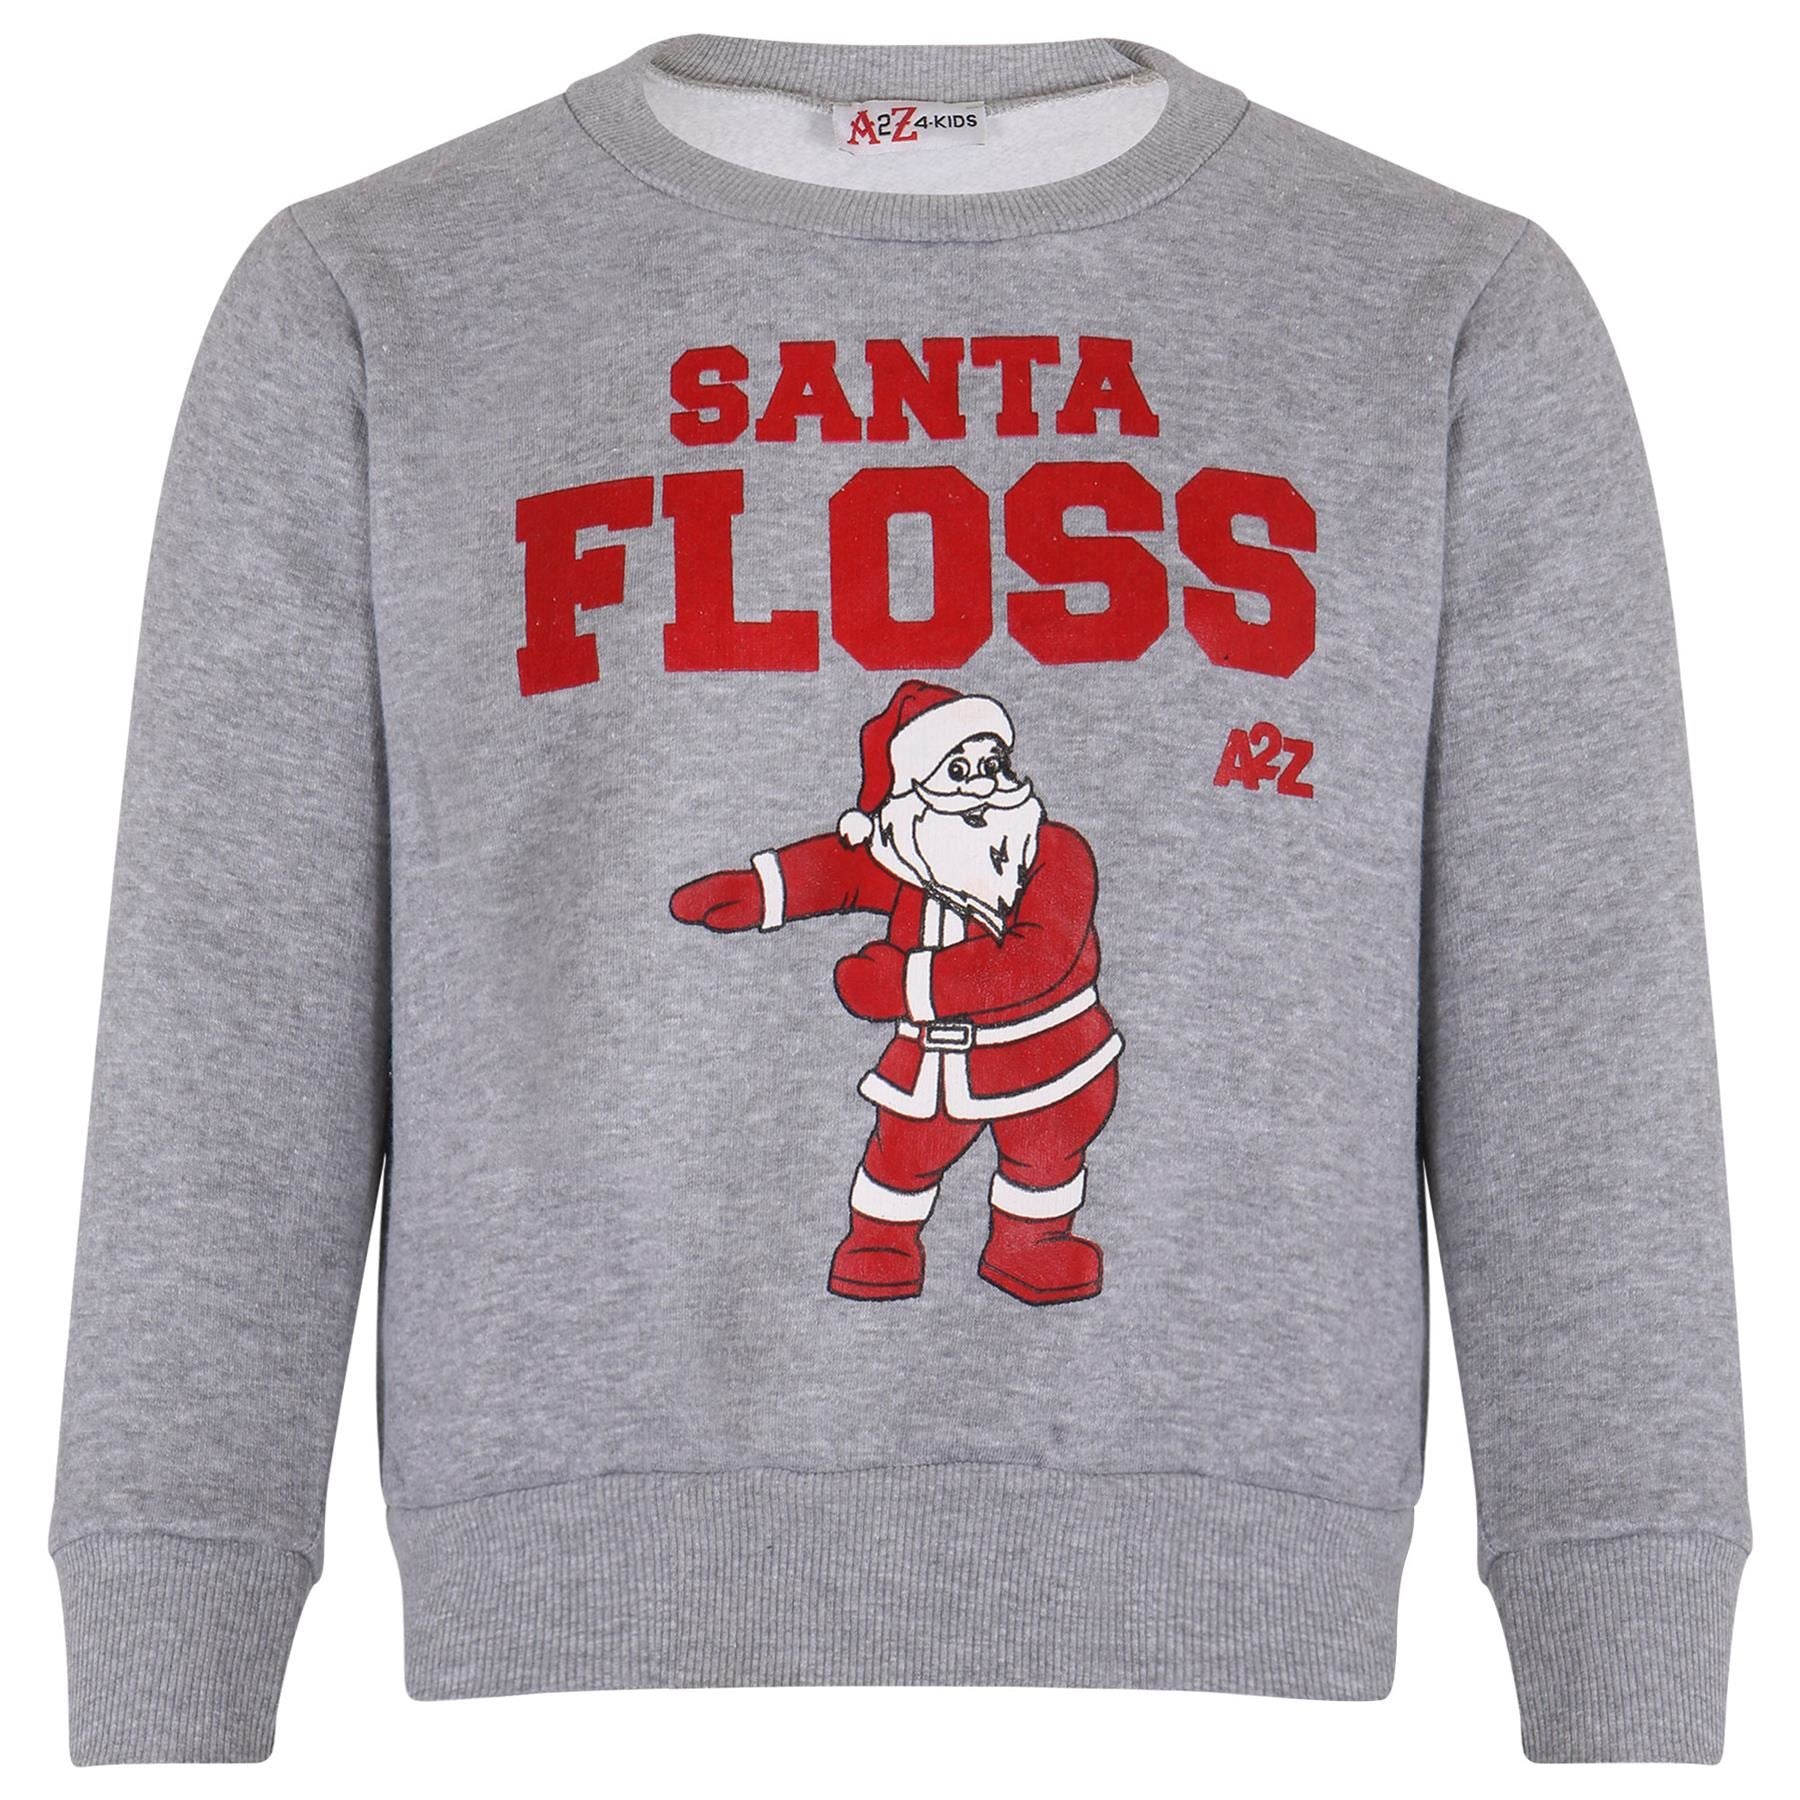 Kids Girls Boys Grey Christmas Jumper Pullover Sweatshirt Santa Floss Print